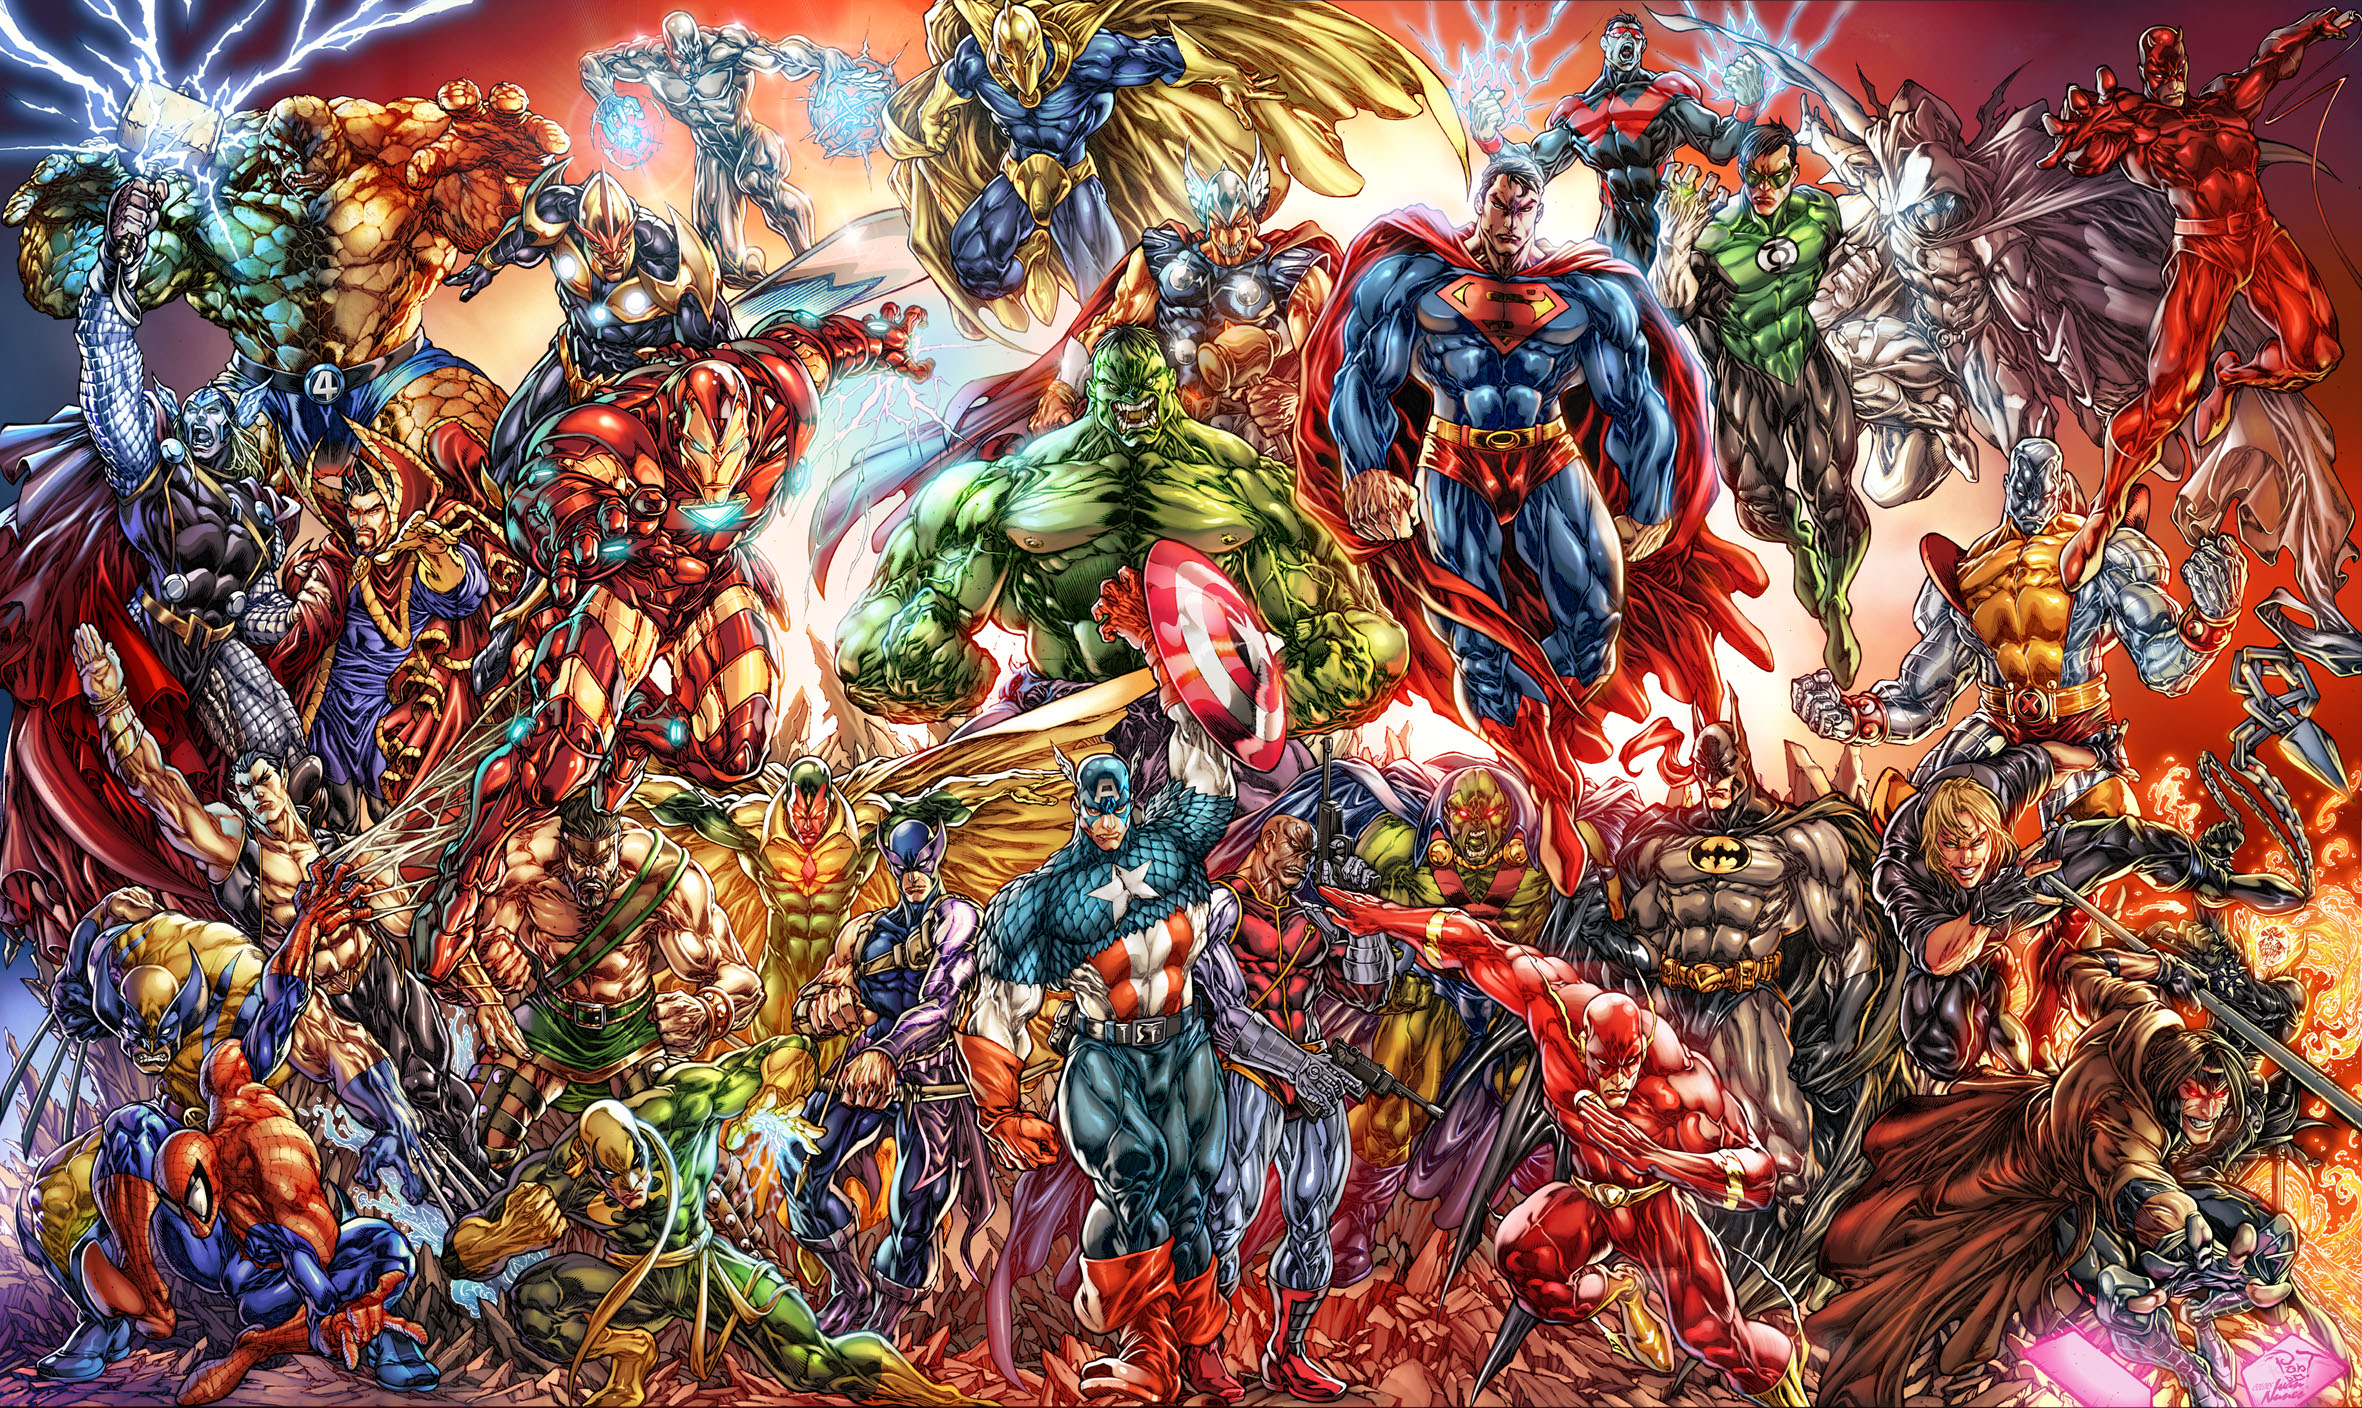 batman, superman, vision (marvel comics), comics, hulk, spider man, collage, dc comics, daredevil, ghost rider, iron man, thor, hal jordan, martian manhunter, barry allen, wolverine, ben grimm, beta ray bill, captain america, clint barton, colossus, danny rand, deathlok, doctor fate (dc comics), doctor strange, flash, gambit (marvel comics), green lantern, hawkeye, hercules (marvel comics), iron fist (marvel comics), j'onn j'onzz, longshot (marvel comics), moon knight, namor the sub mariner, nightwing, nova (marvel comics), peter parker, silver surfer, sub mariner, thing (marvel comics), wonder man